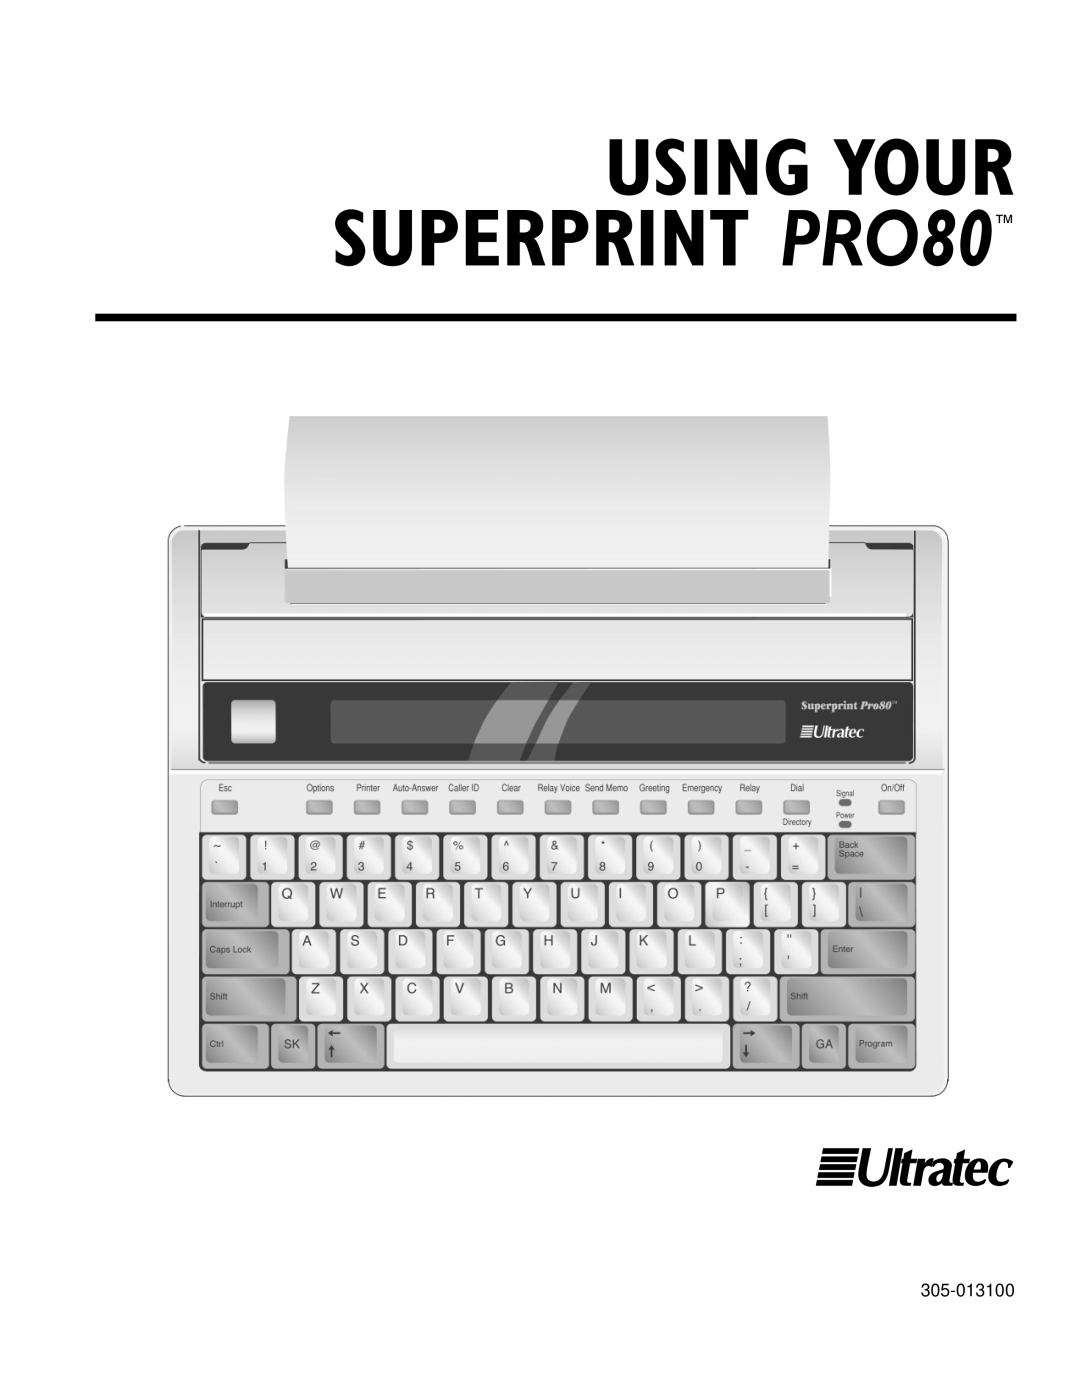 Ultratec PRO80TM manual USING YOUR SUPERPRINT PRO80, 305-013100 